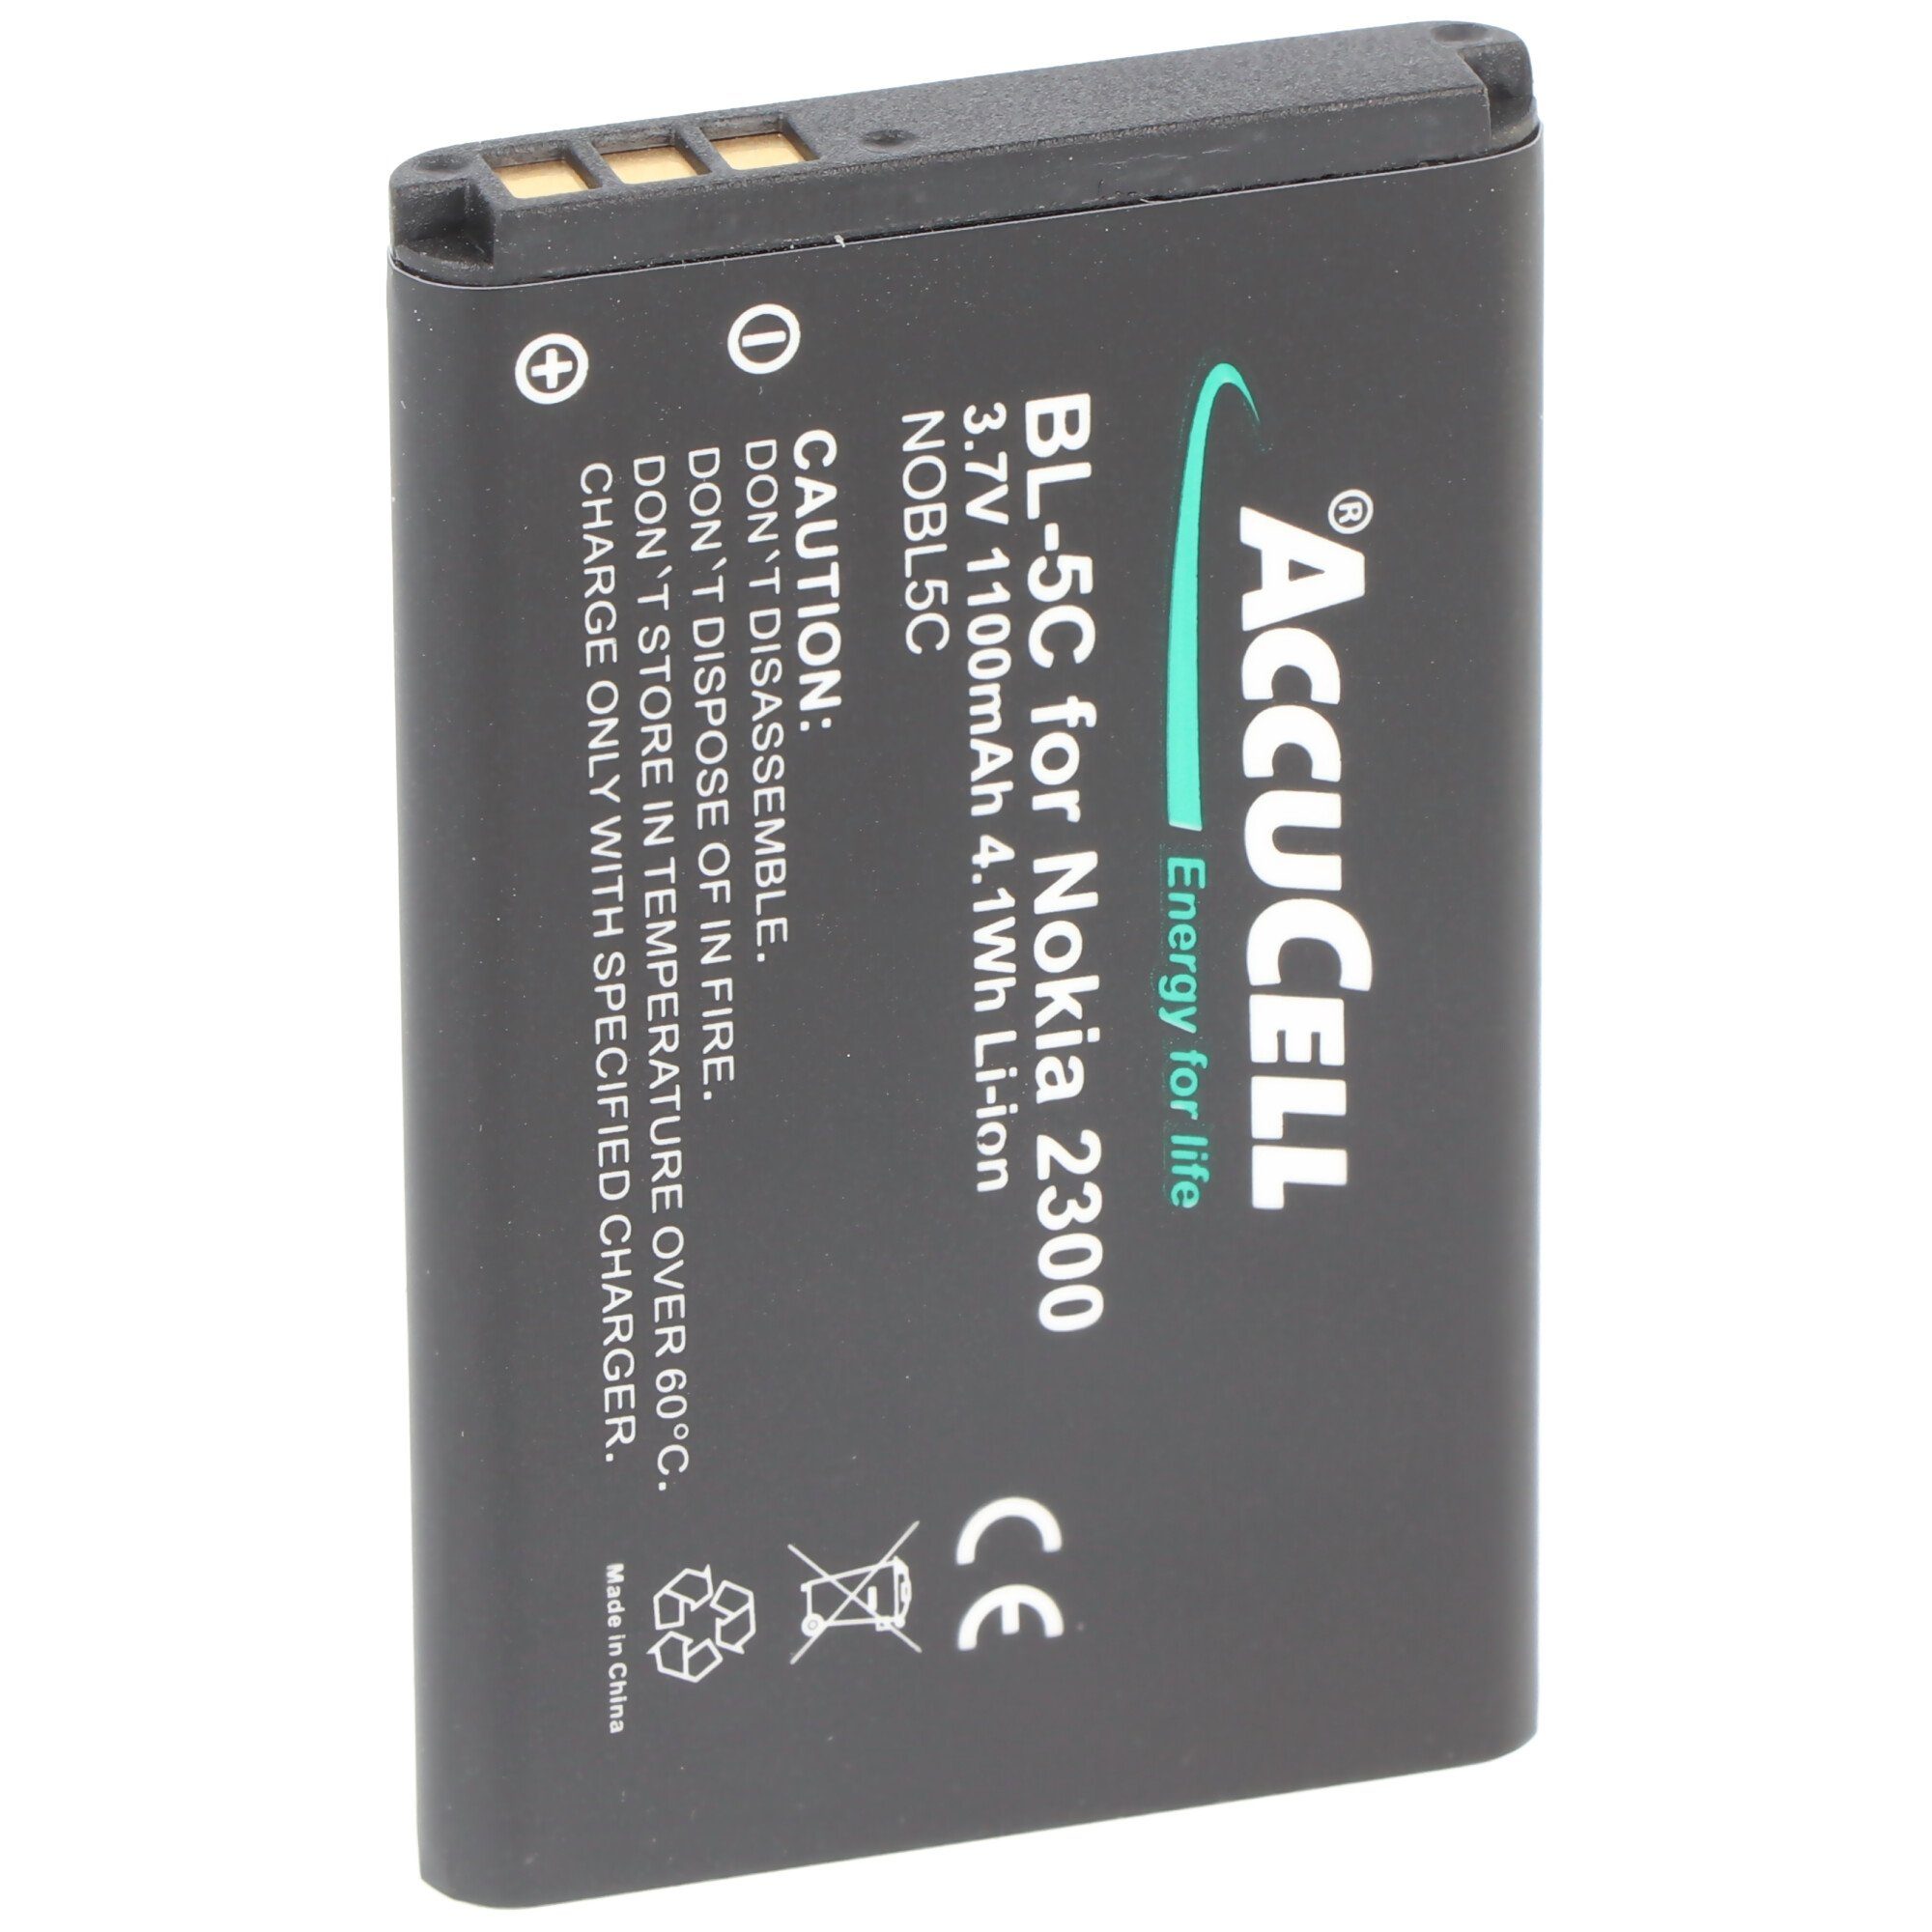 4,1Wh RC AccuCell für Akku Akku 1100mAh Primo 3.7VDC passend Battery Doro Li-ion by